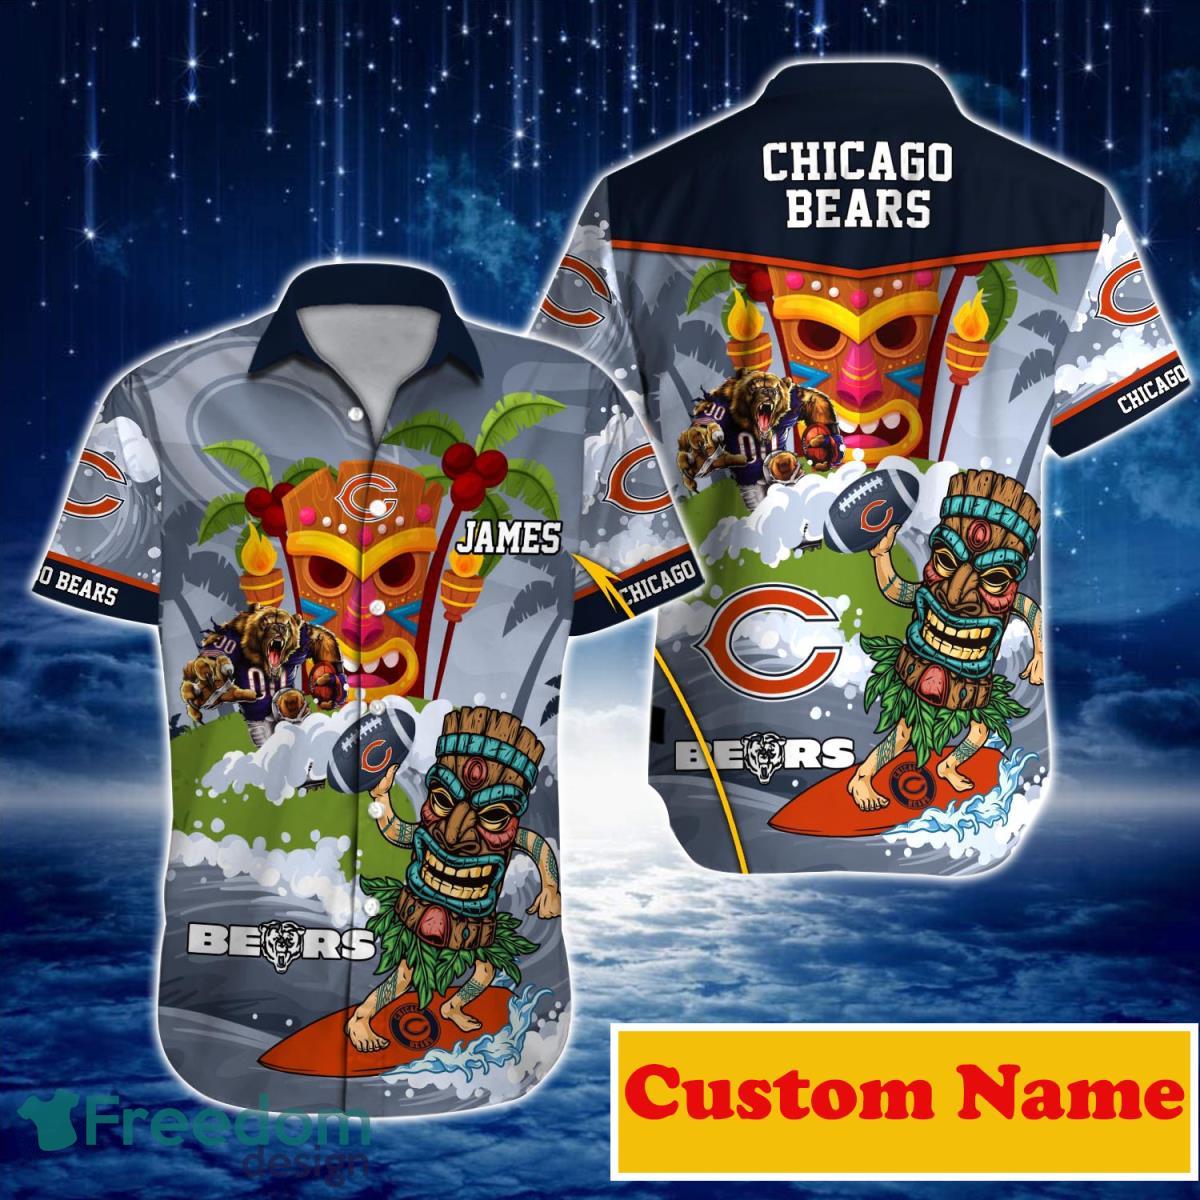 chicago bears shirts mens